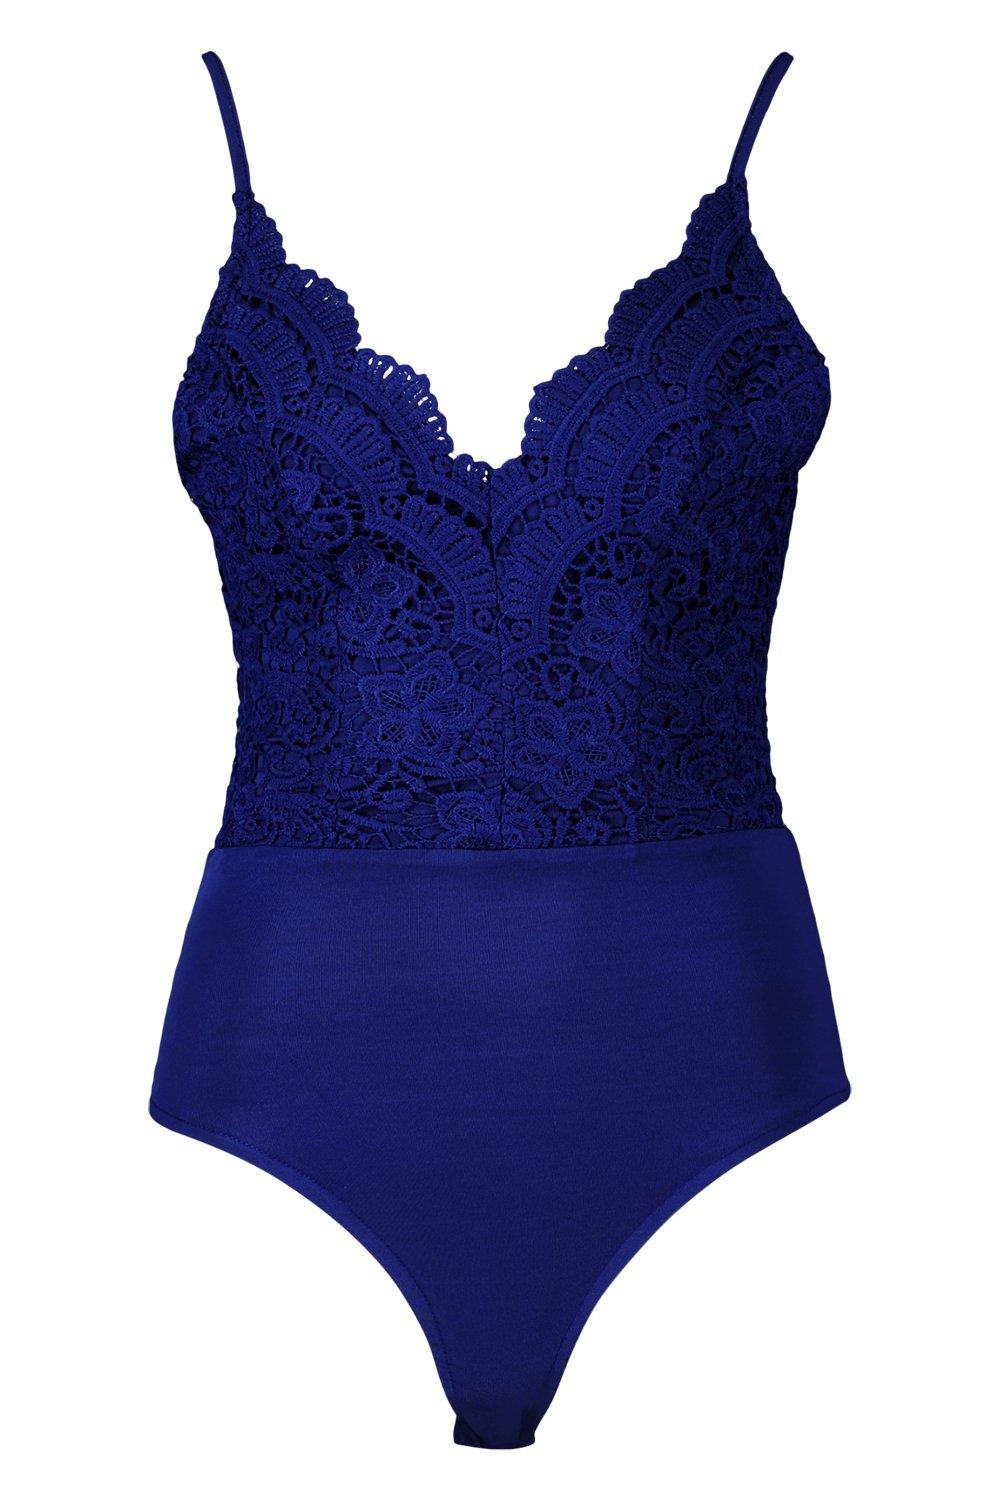 Julianna Dark Blue Plus Lace bodysuit, 2X